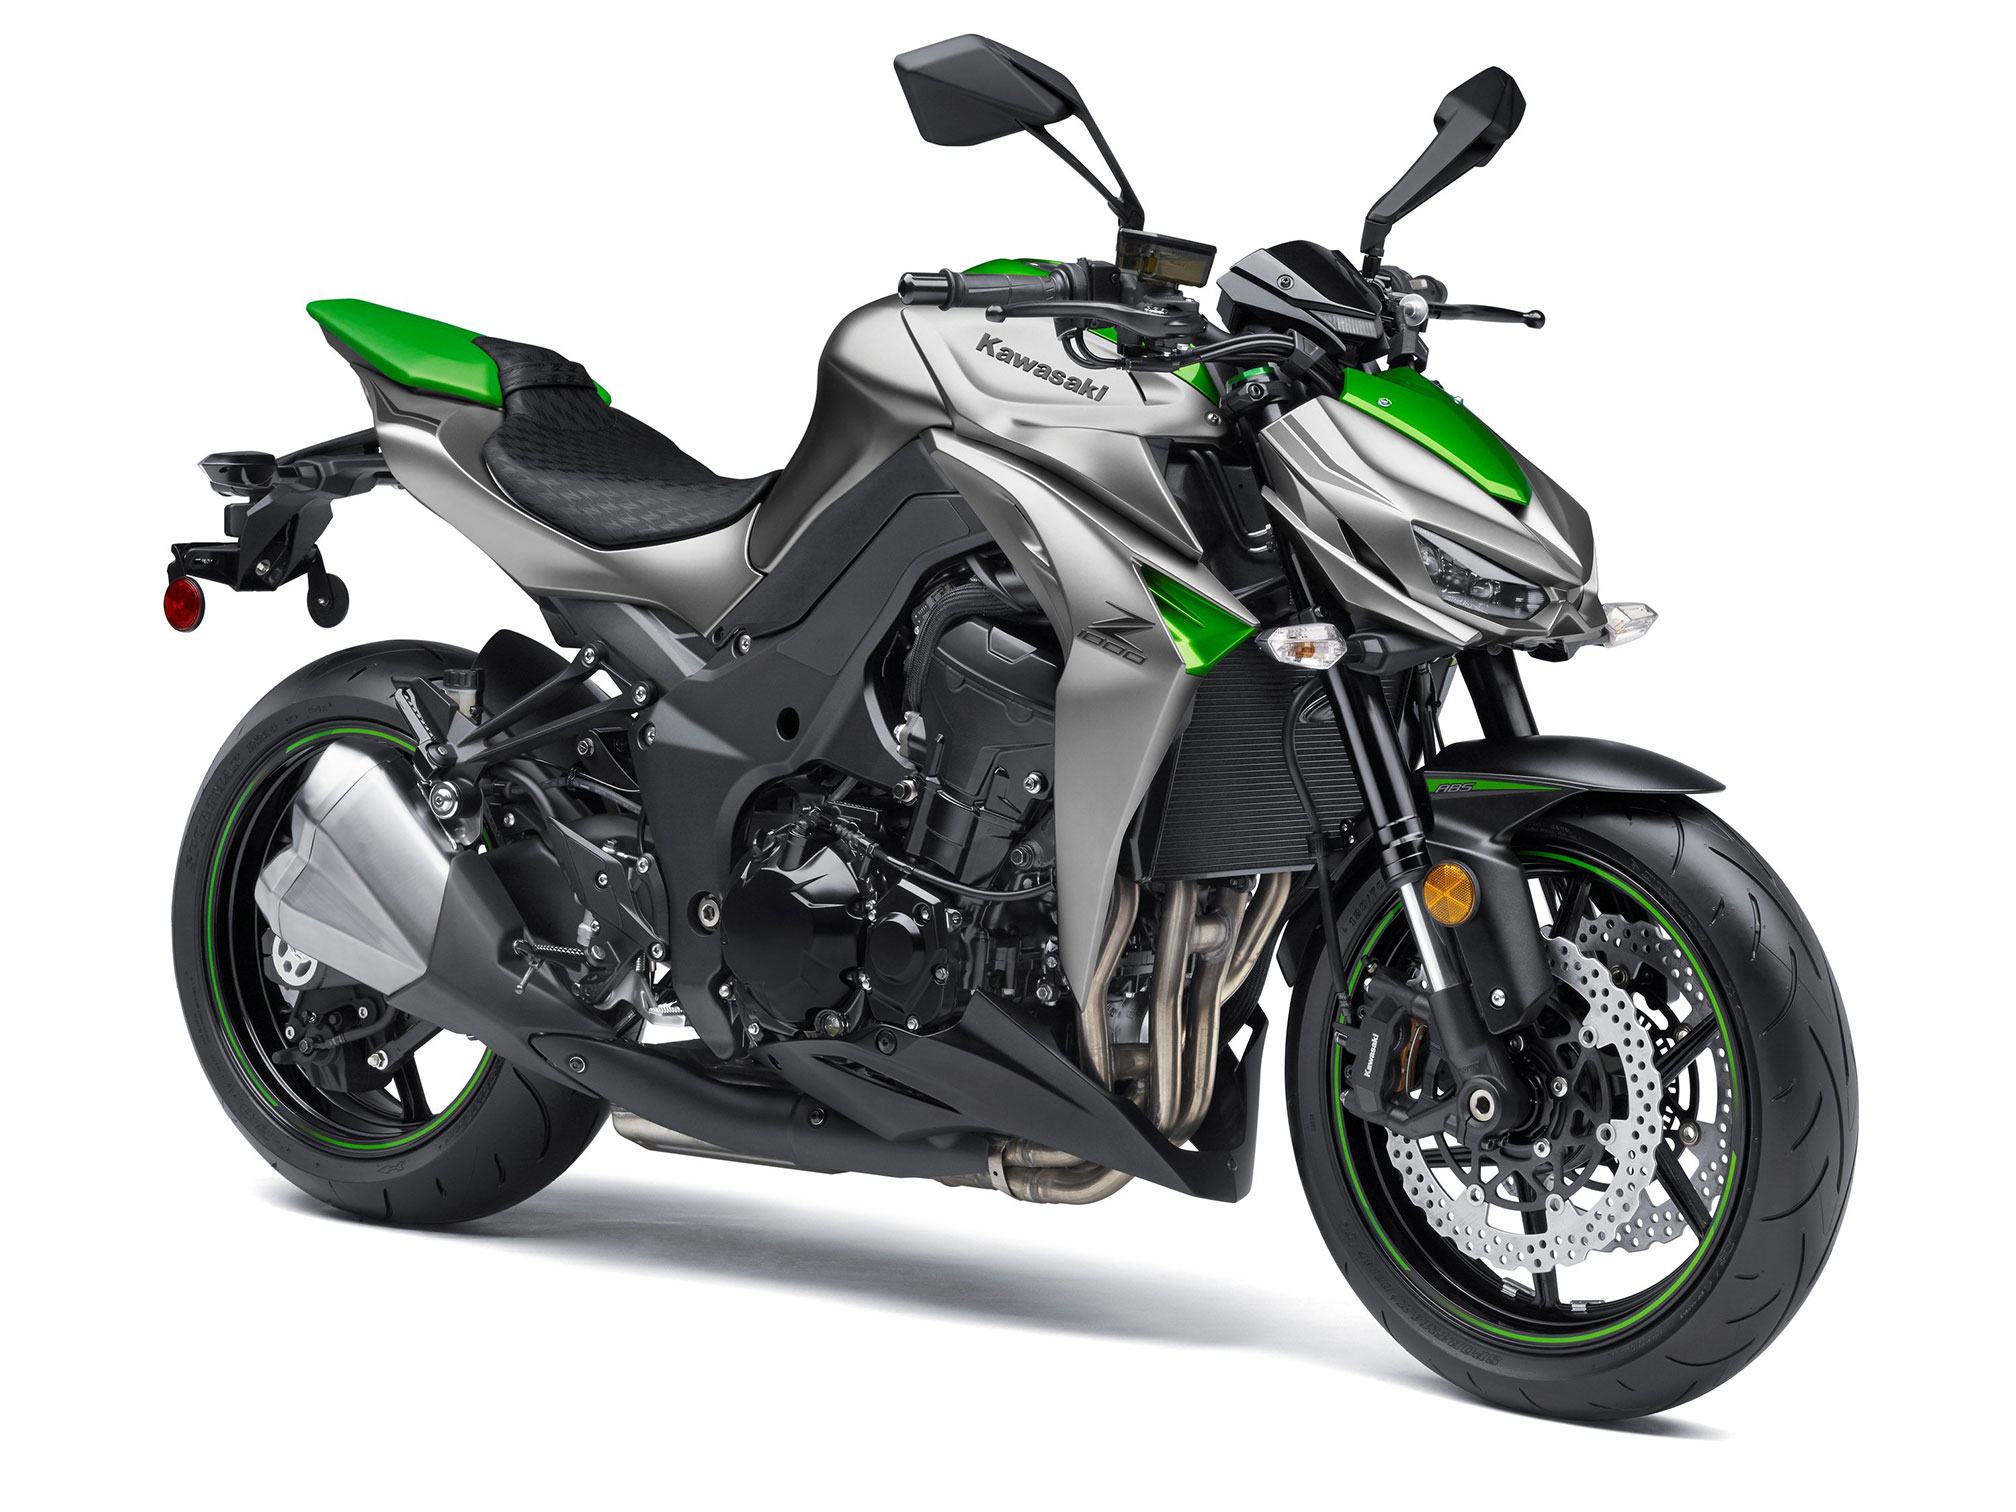 2018 USED/ SECOND HANDED Kawasaki Ninja ZX-10R SE Motorcycles at affordable prices